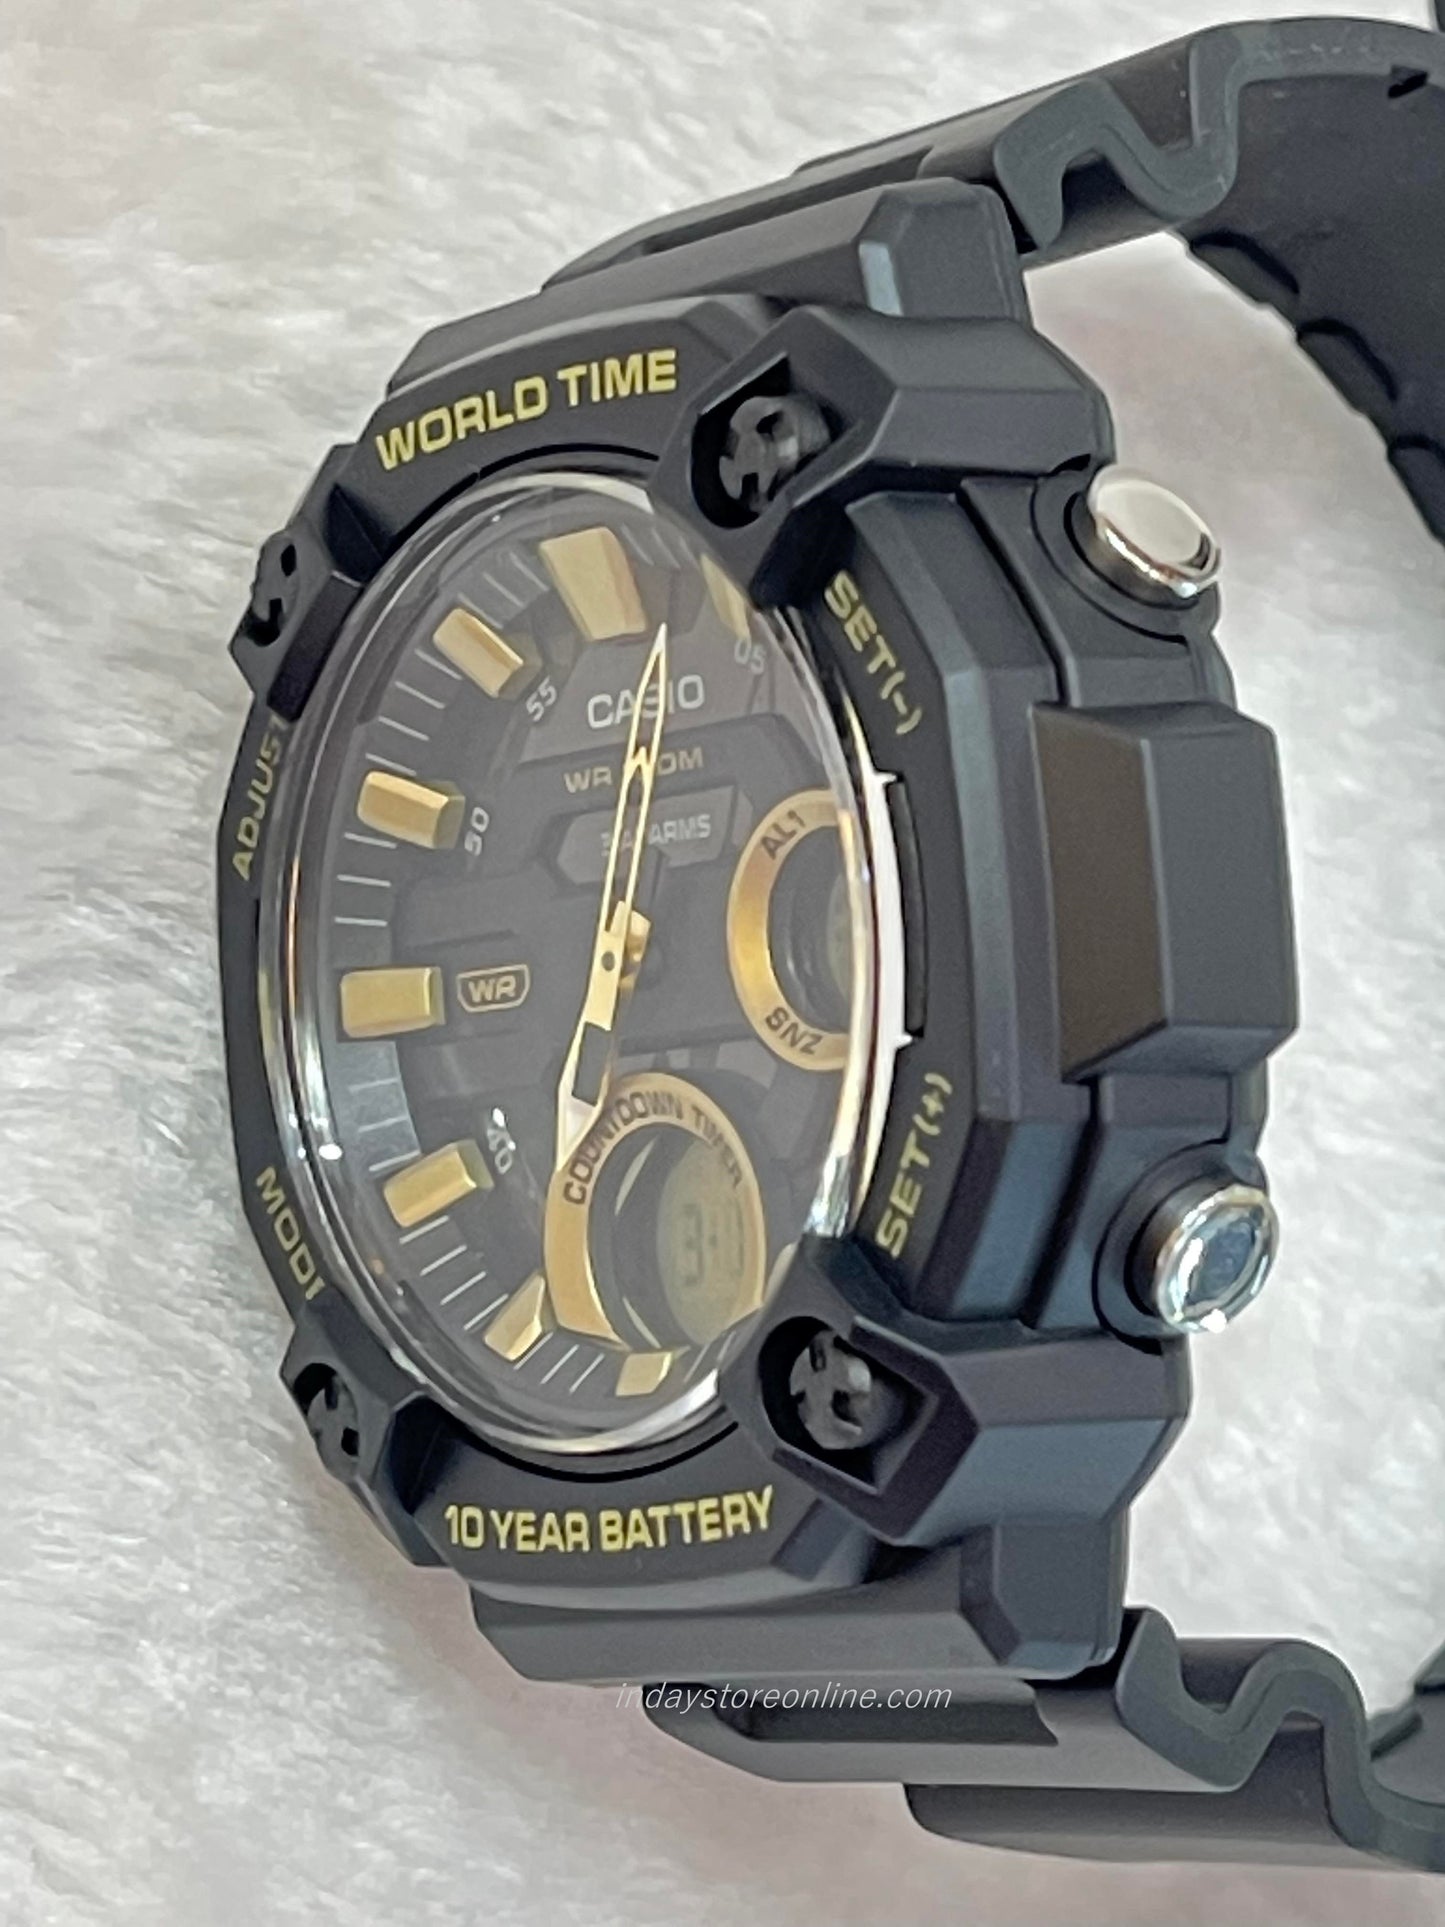 Casio Analog-Digital Men's Watch AEQ-120W-9A